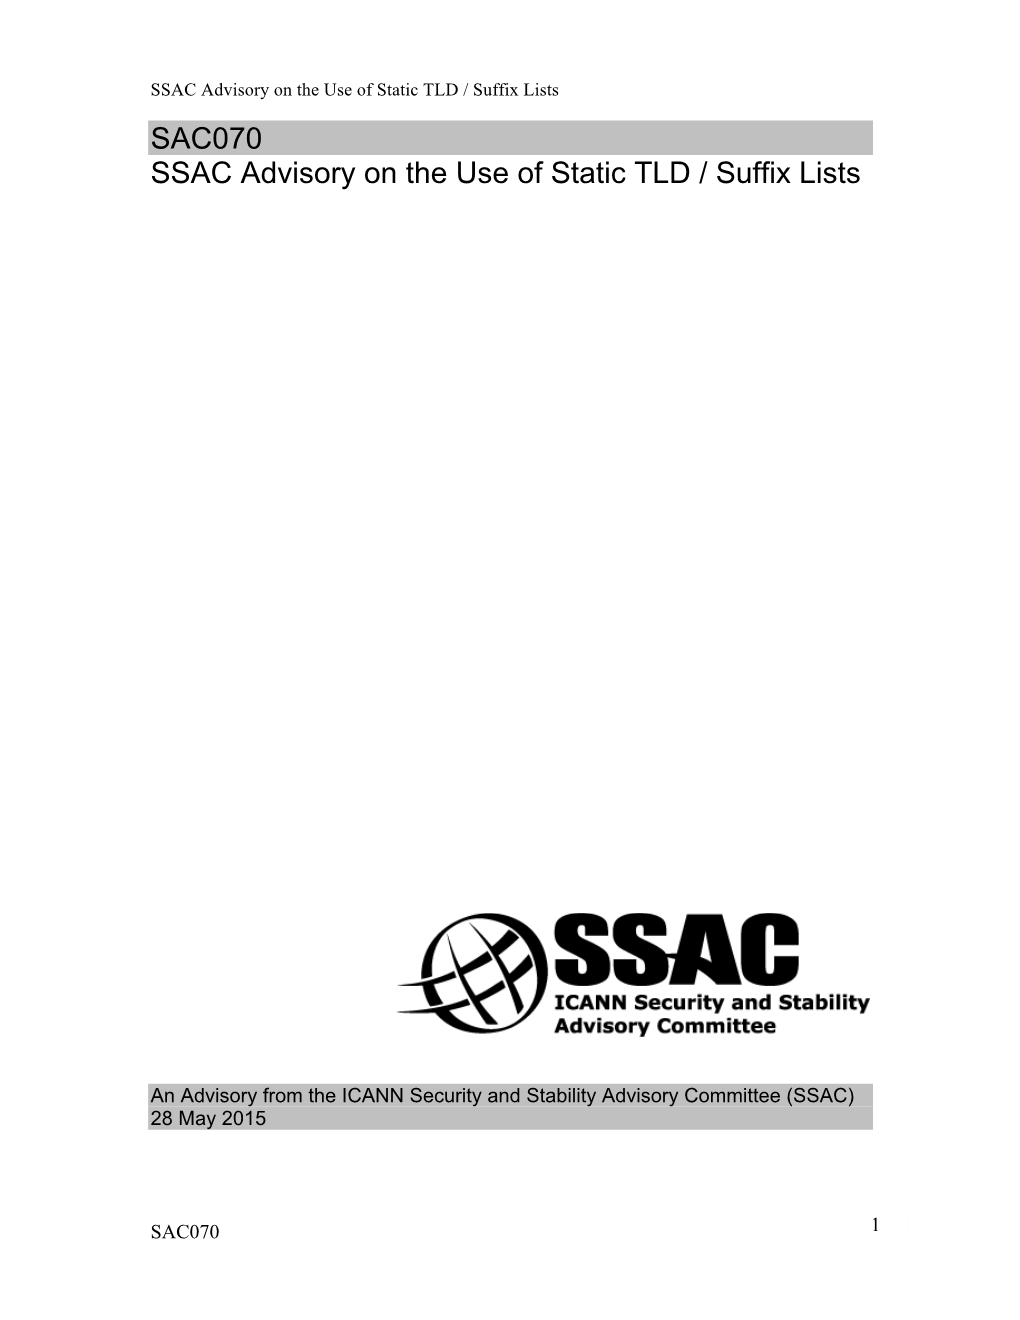 SAC070 SSAC Advisory on the Use of Static TLD / Suffix Lists